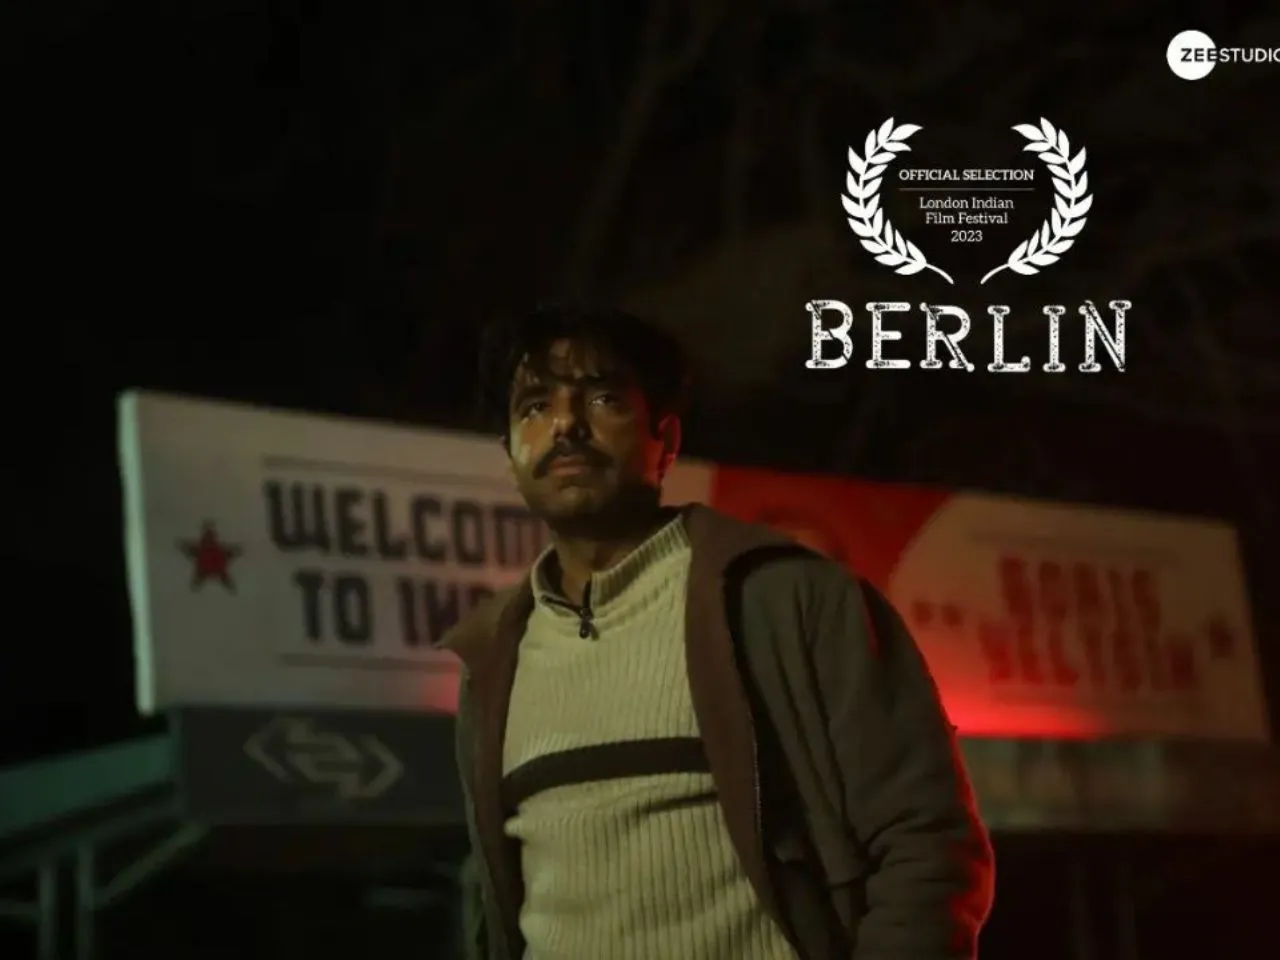 Berlin review